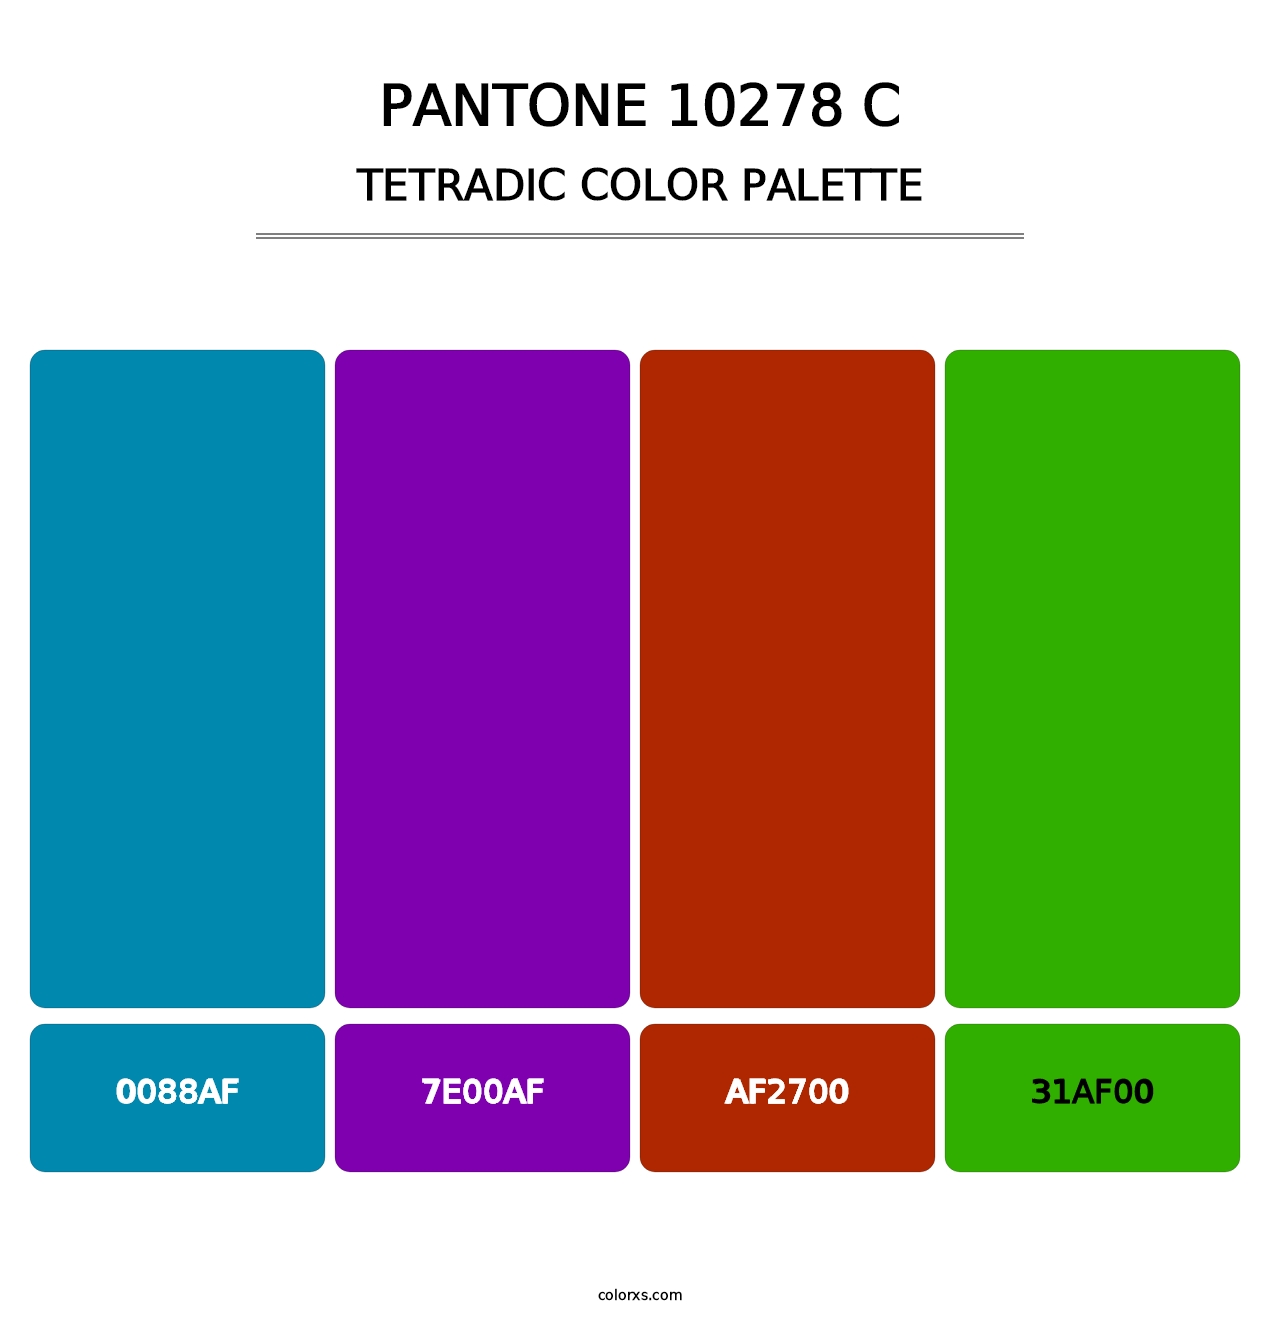 PANTONE 10278 C - Tetradic Color Palette